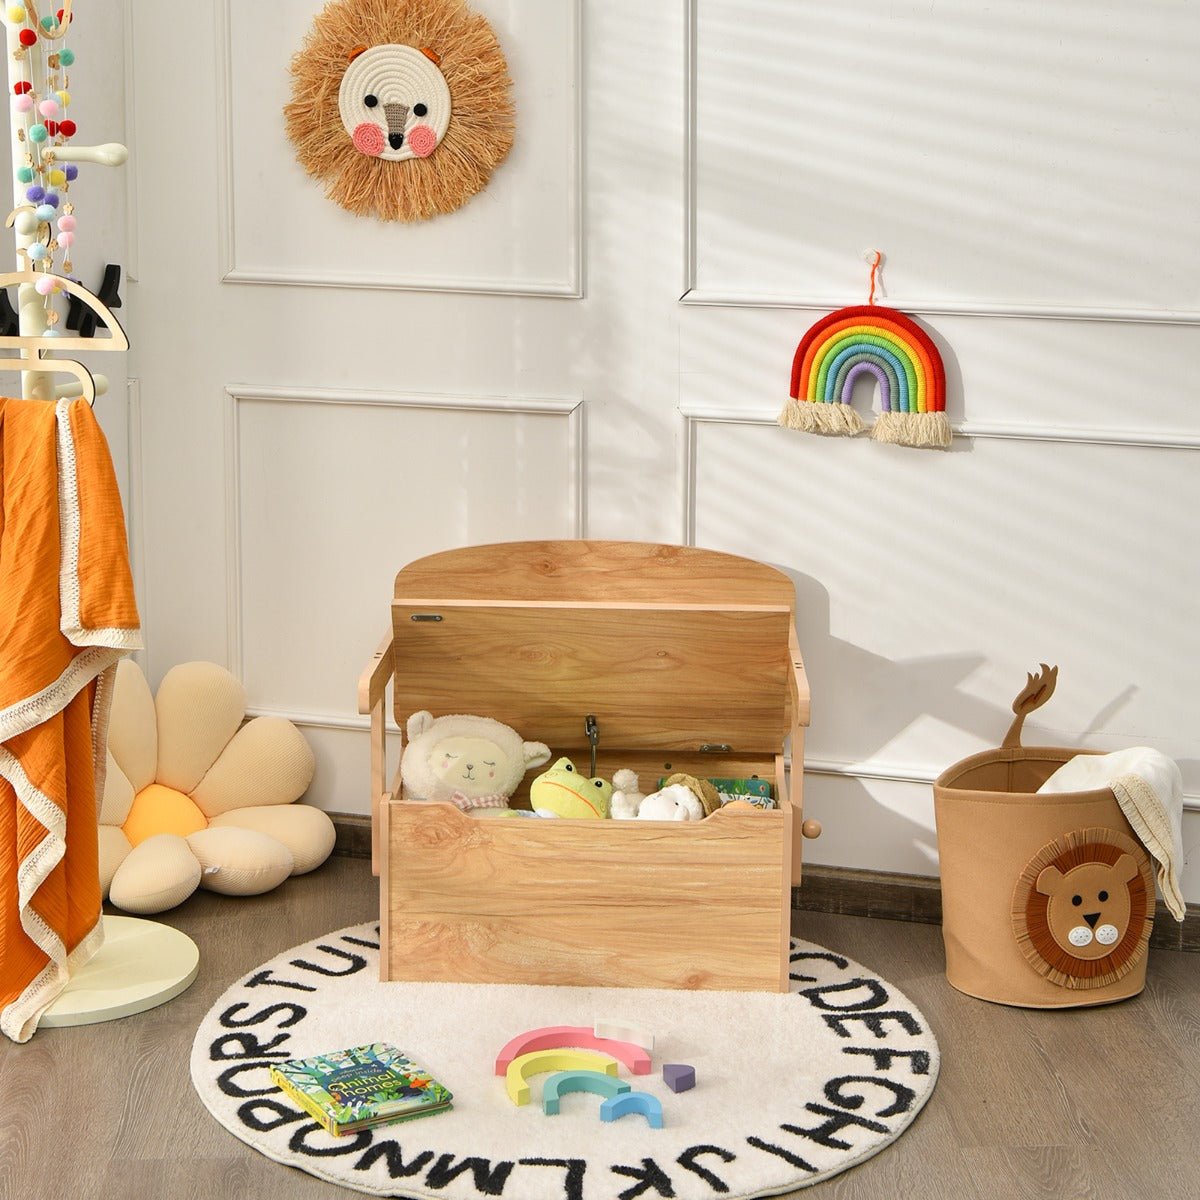 Kids Activity Bench Table Set with Toy Storage Box Natural - Kids Mega Mart